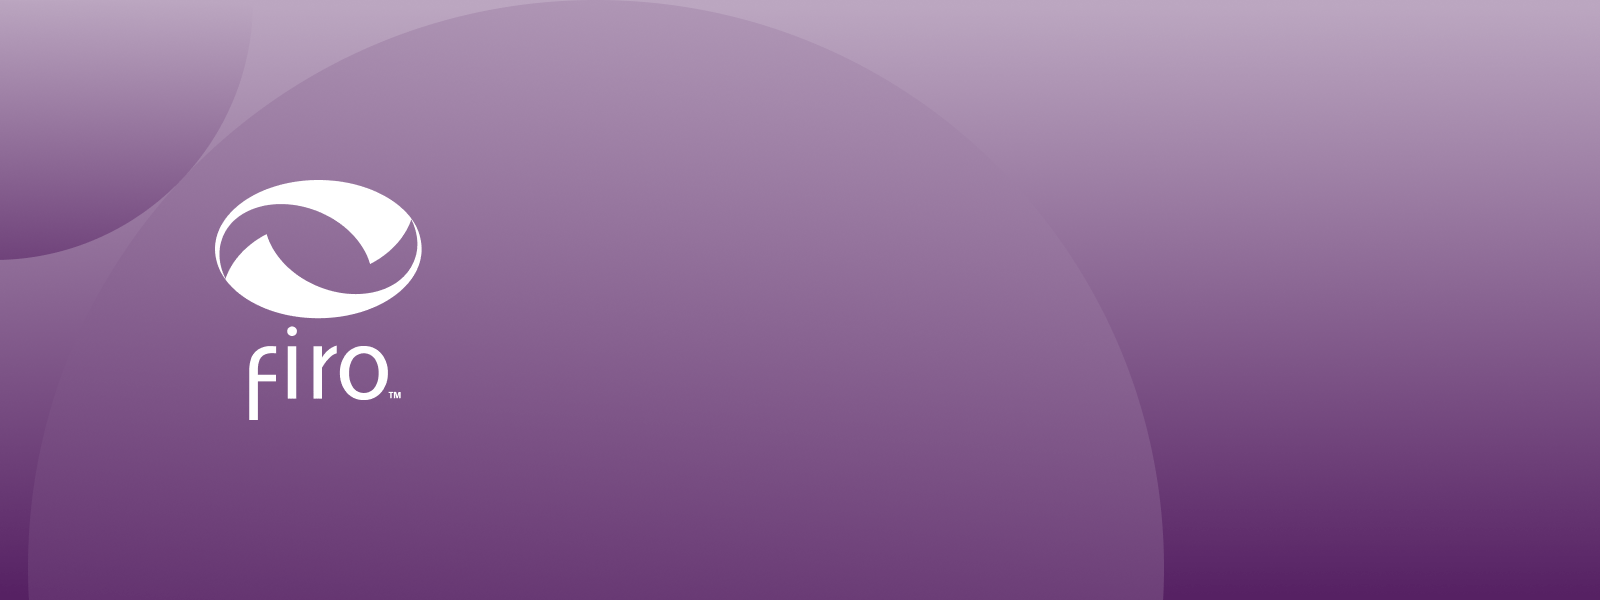 FIRO logo on a purple background